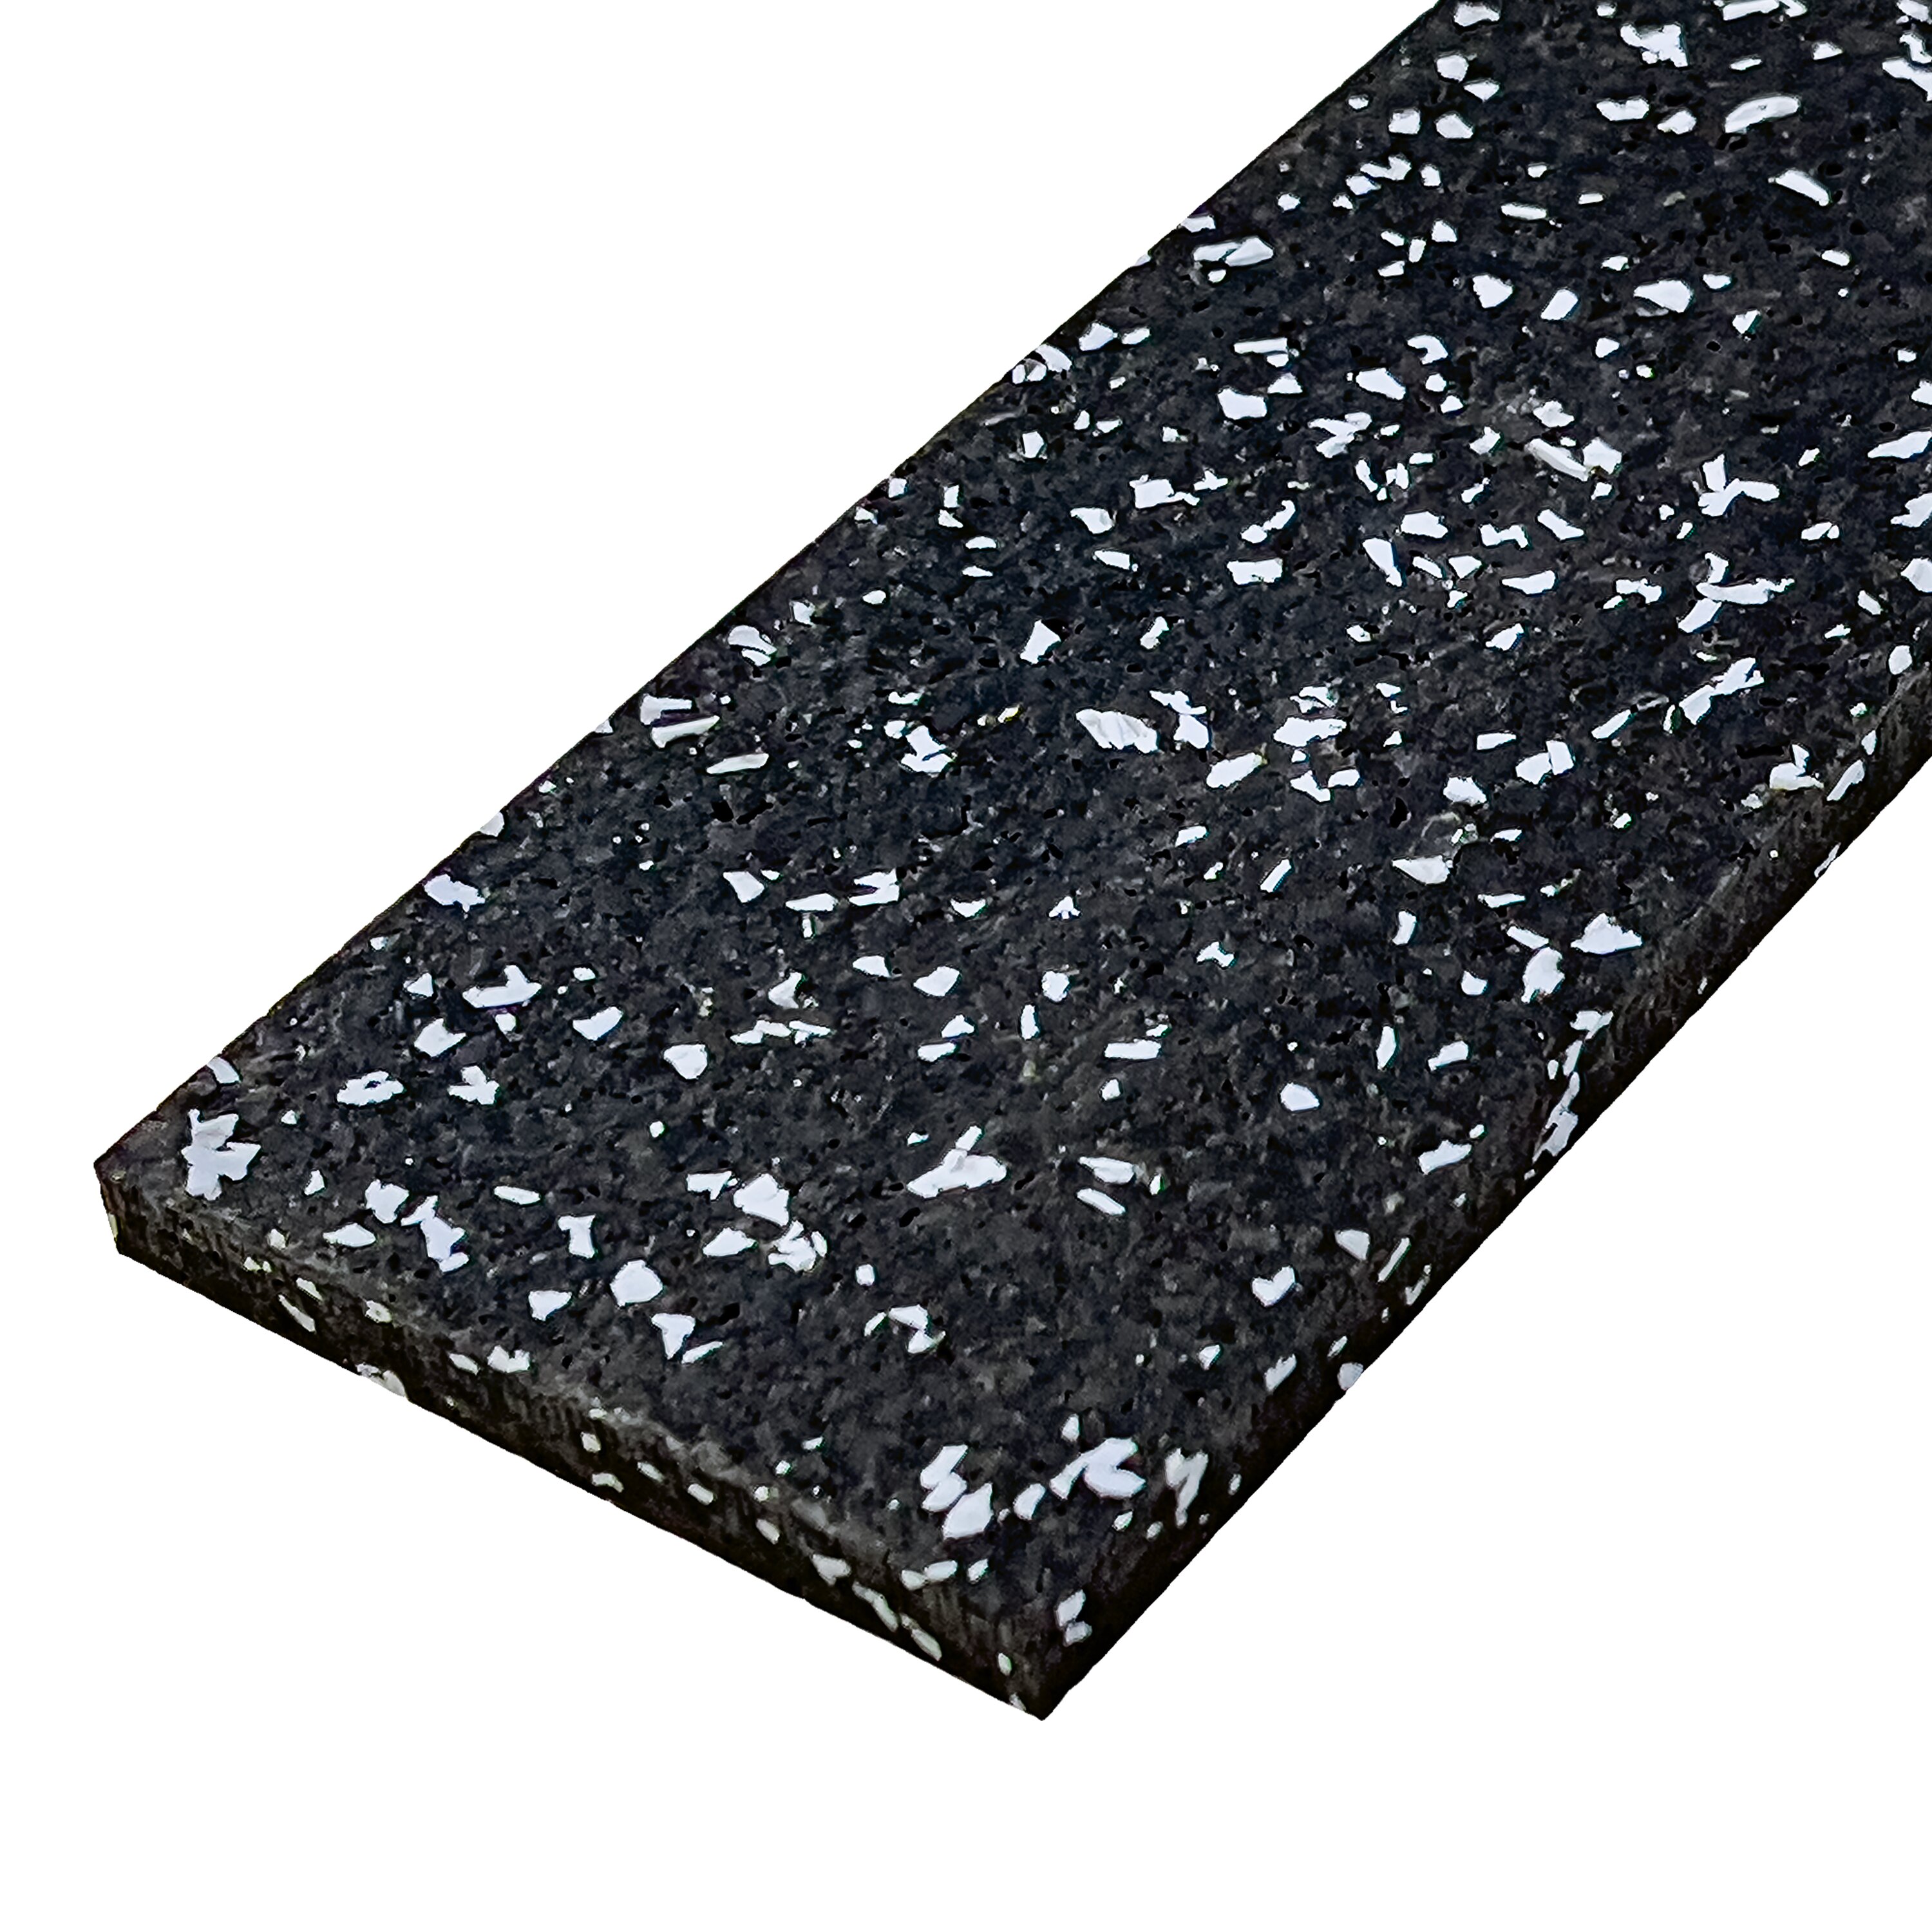 Čierno-sivá gumová soklová podlahová lišta FLOMA FitFlo IceFlo - dĺžka 200 cm, šírka 7 cm, hrúbka 0,8 cm